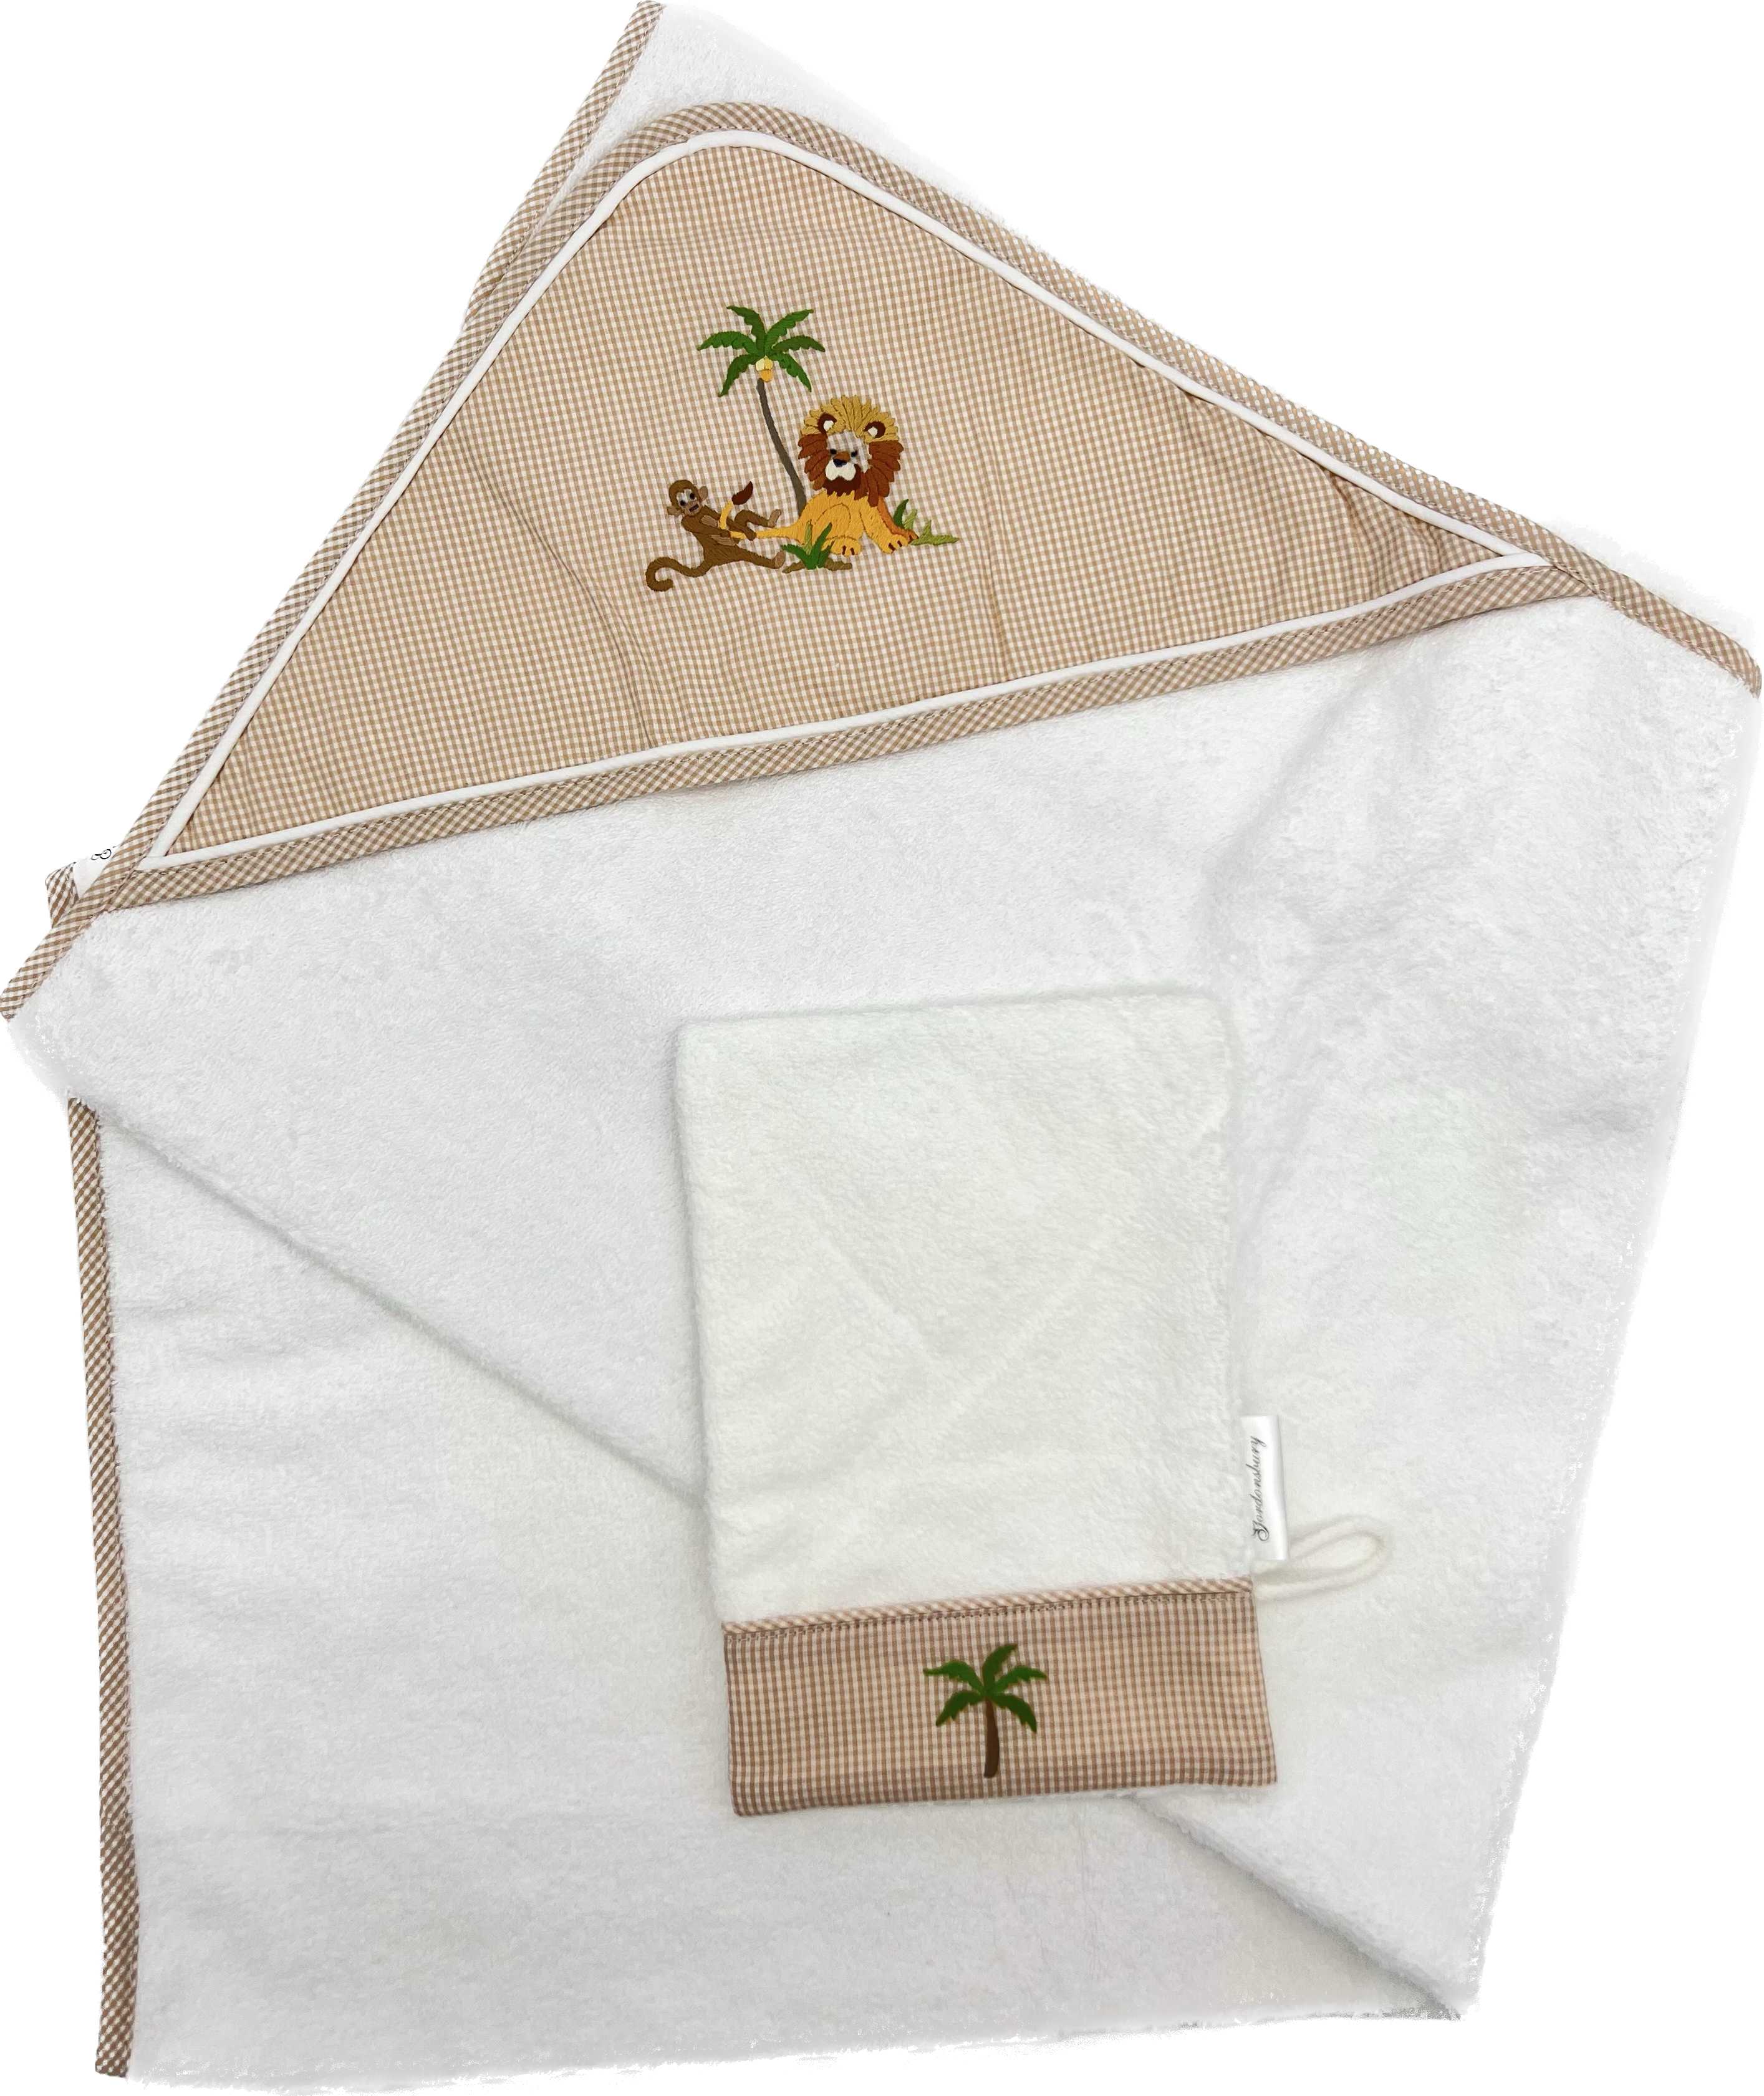 Hooded towel & mitt "safari" beige-Towels & bedlinen-Gordonsbury-Blue Almonds-London-South Kensington